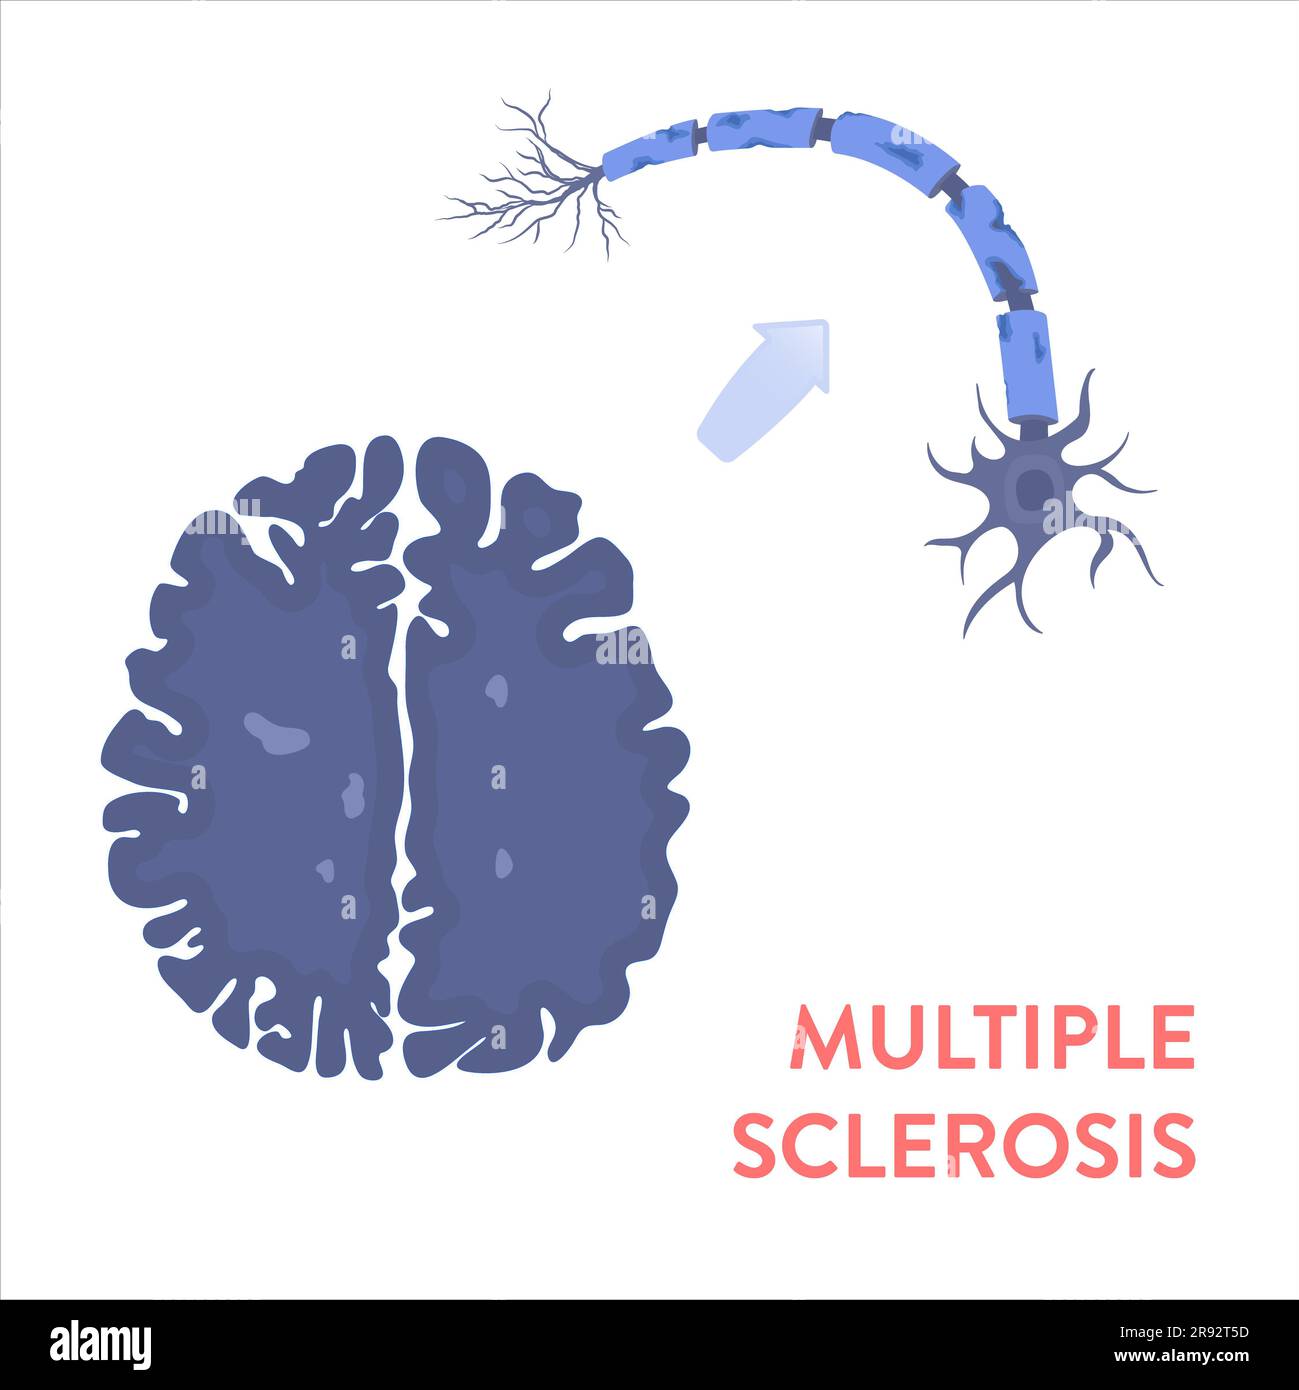 Multiple sclerosis, conceptual illustration Stock Photo - Alamy